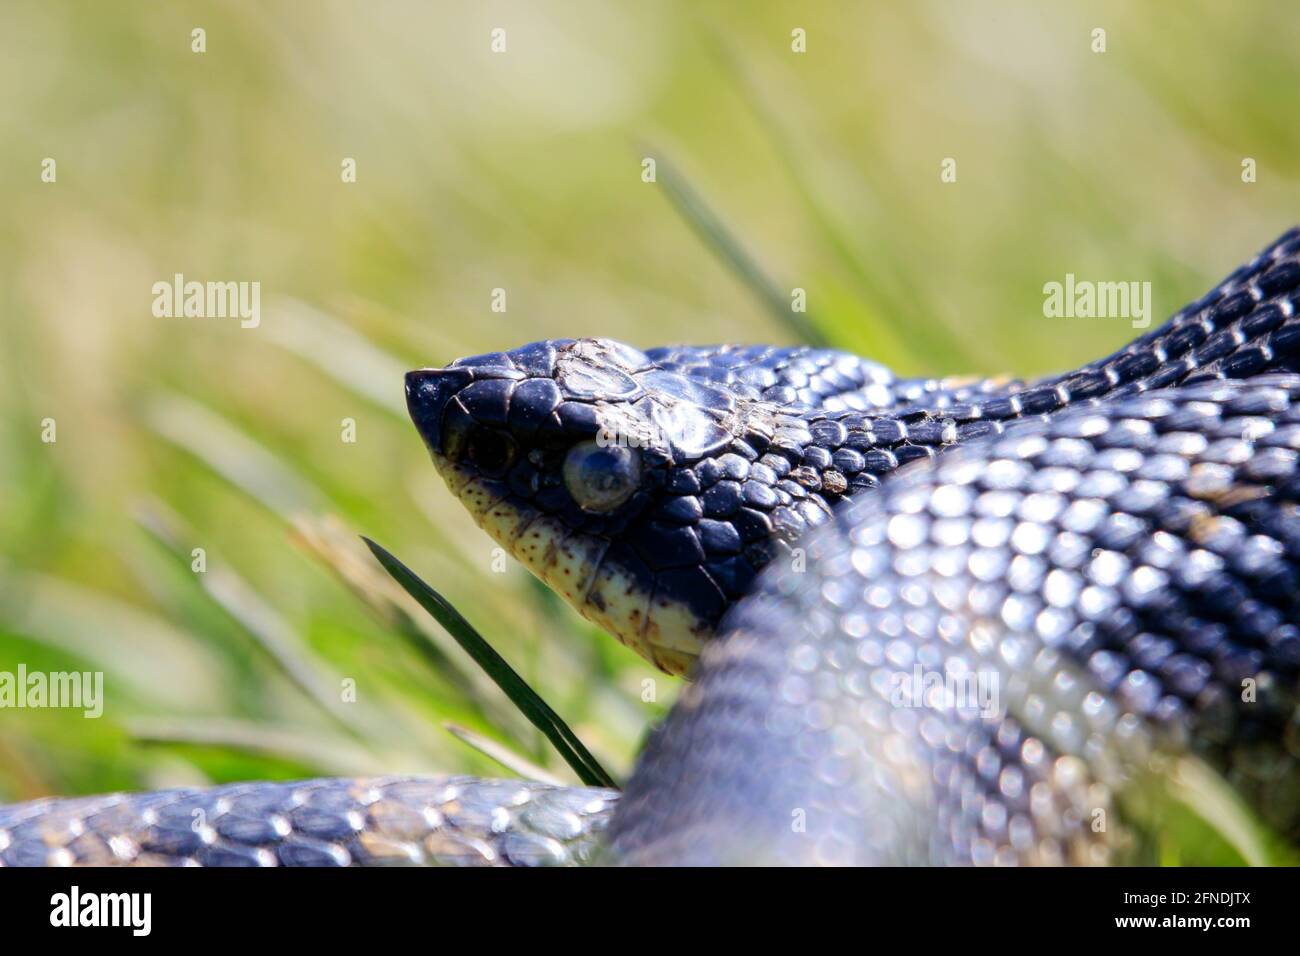 An Eastern Hognose Snake Stock Photo by ©Ondreicka1010 149617402